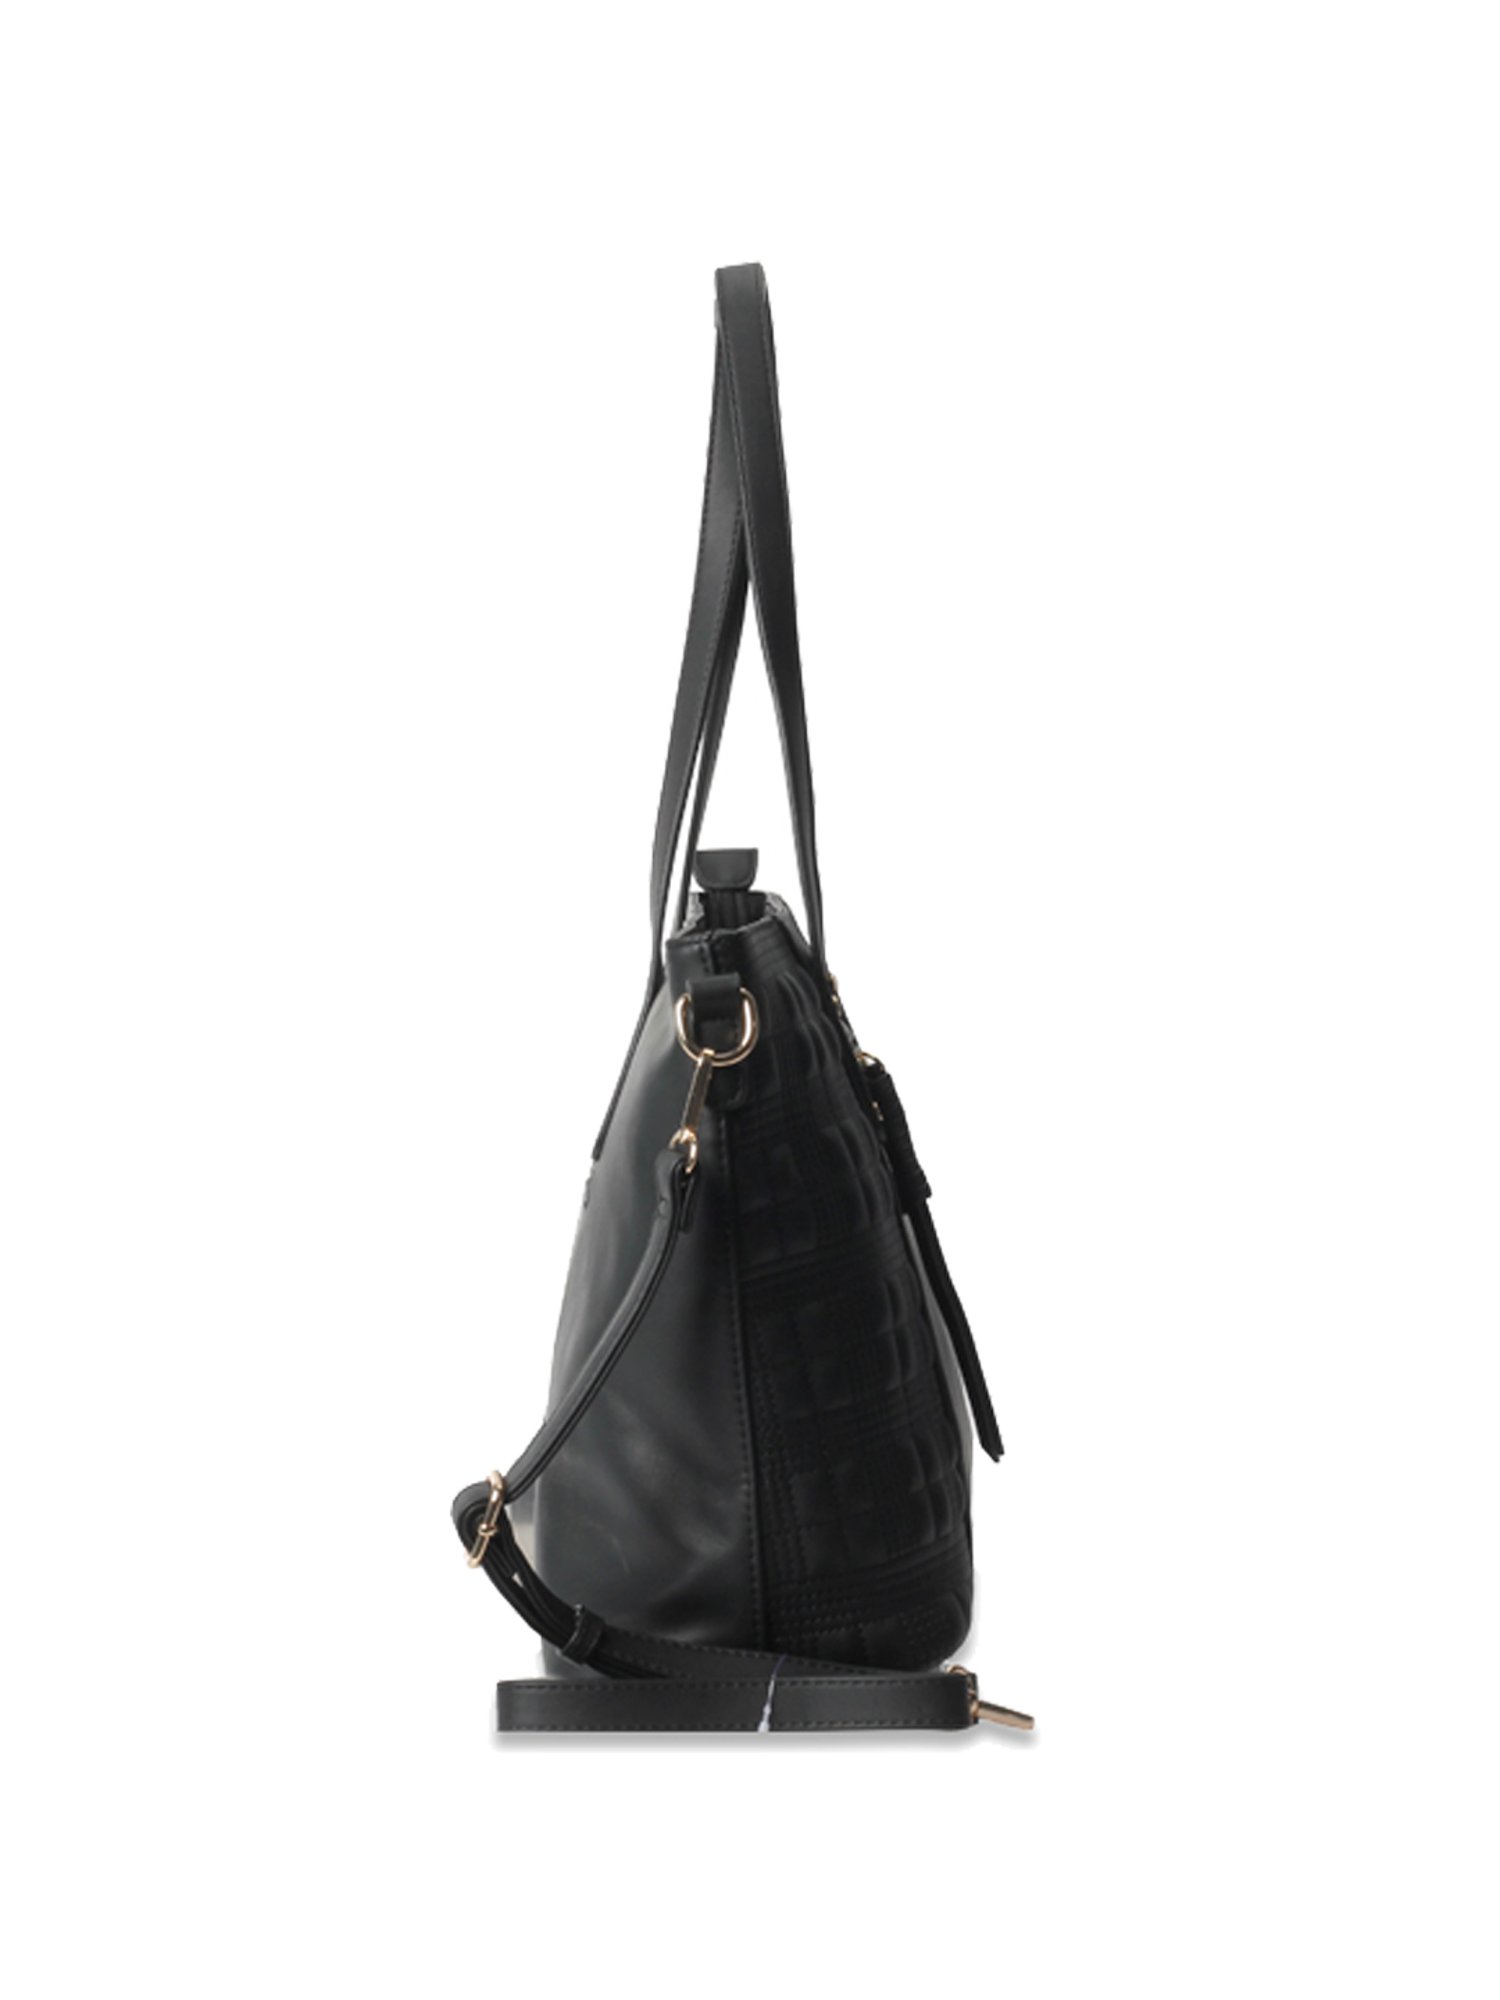 Coach Cherry Shoulder Bag Purse Y2K Chic summer style handbag | Pretty bags,  Bags designer fashion, Fancy bags